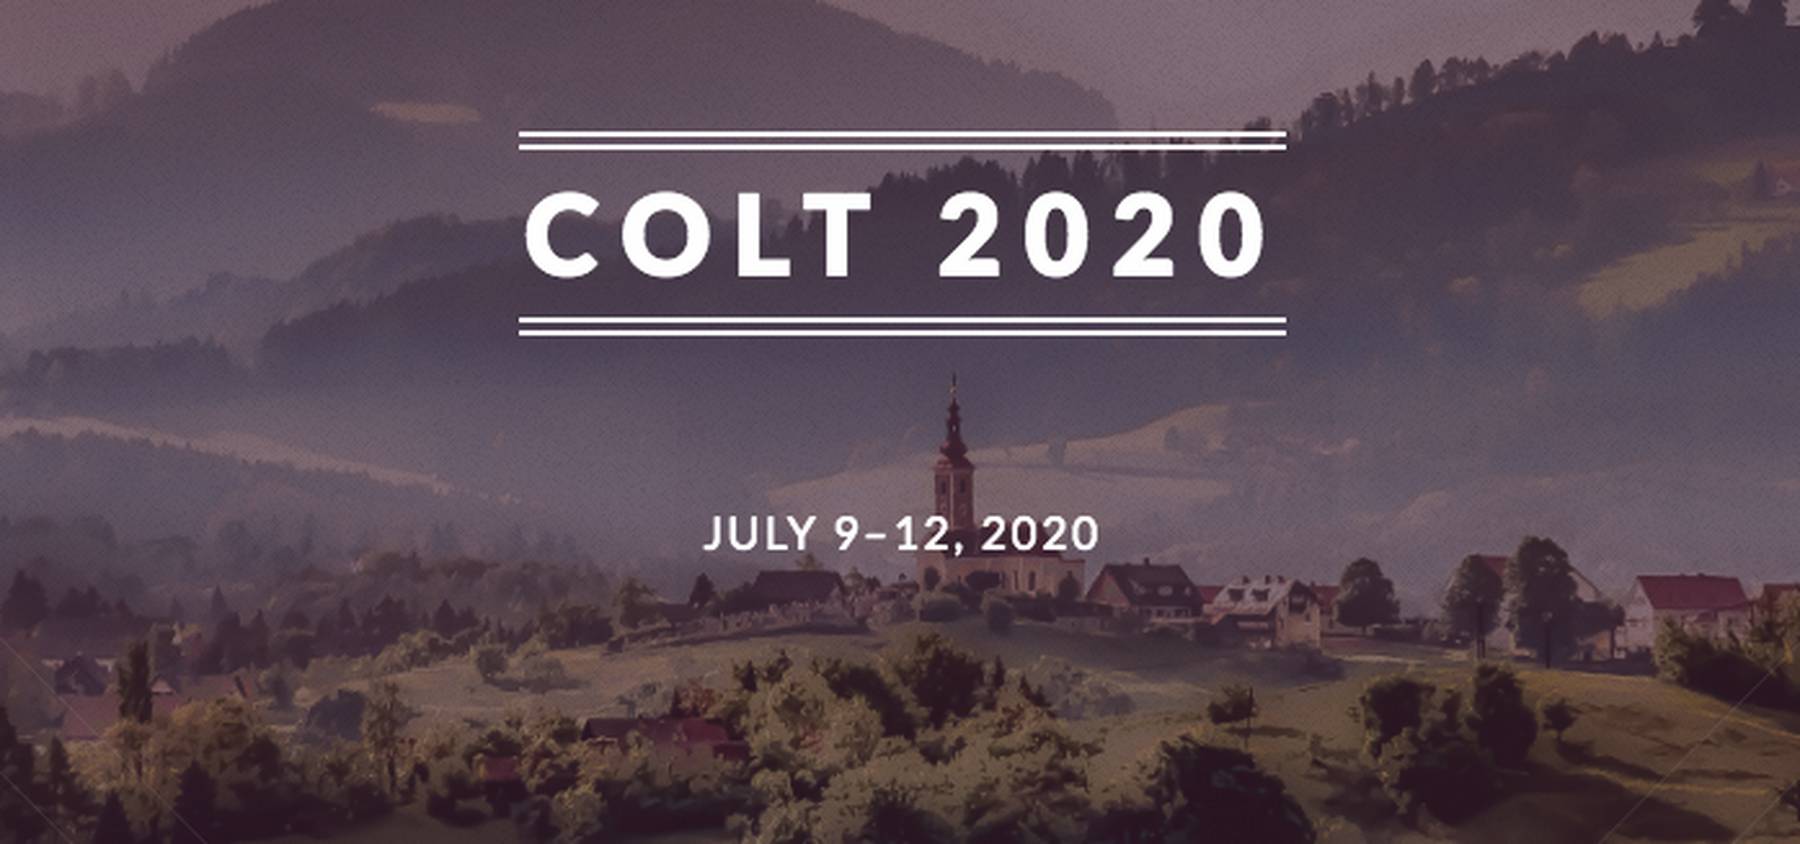 COLT 2020